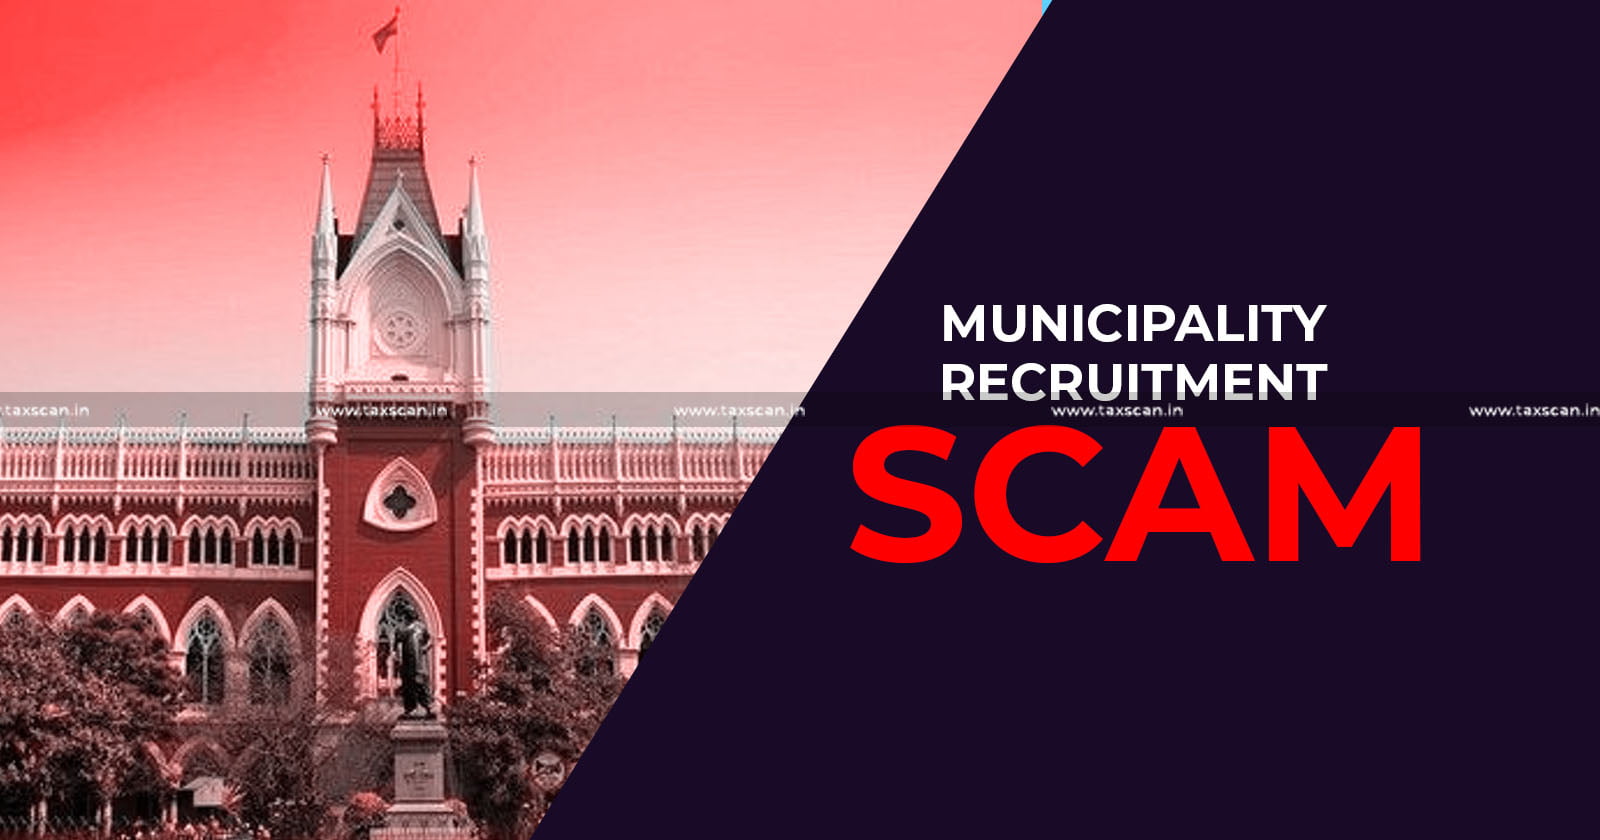 Municipality Recruitment Scam - Calcutta Highcourt dismisses review petition -Calcutta Highcourt - review petition - ED - taxscan